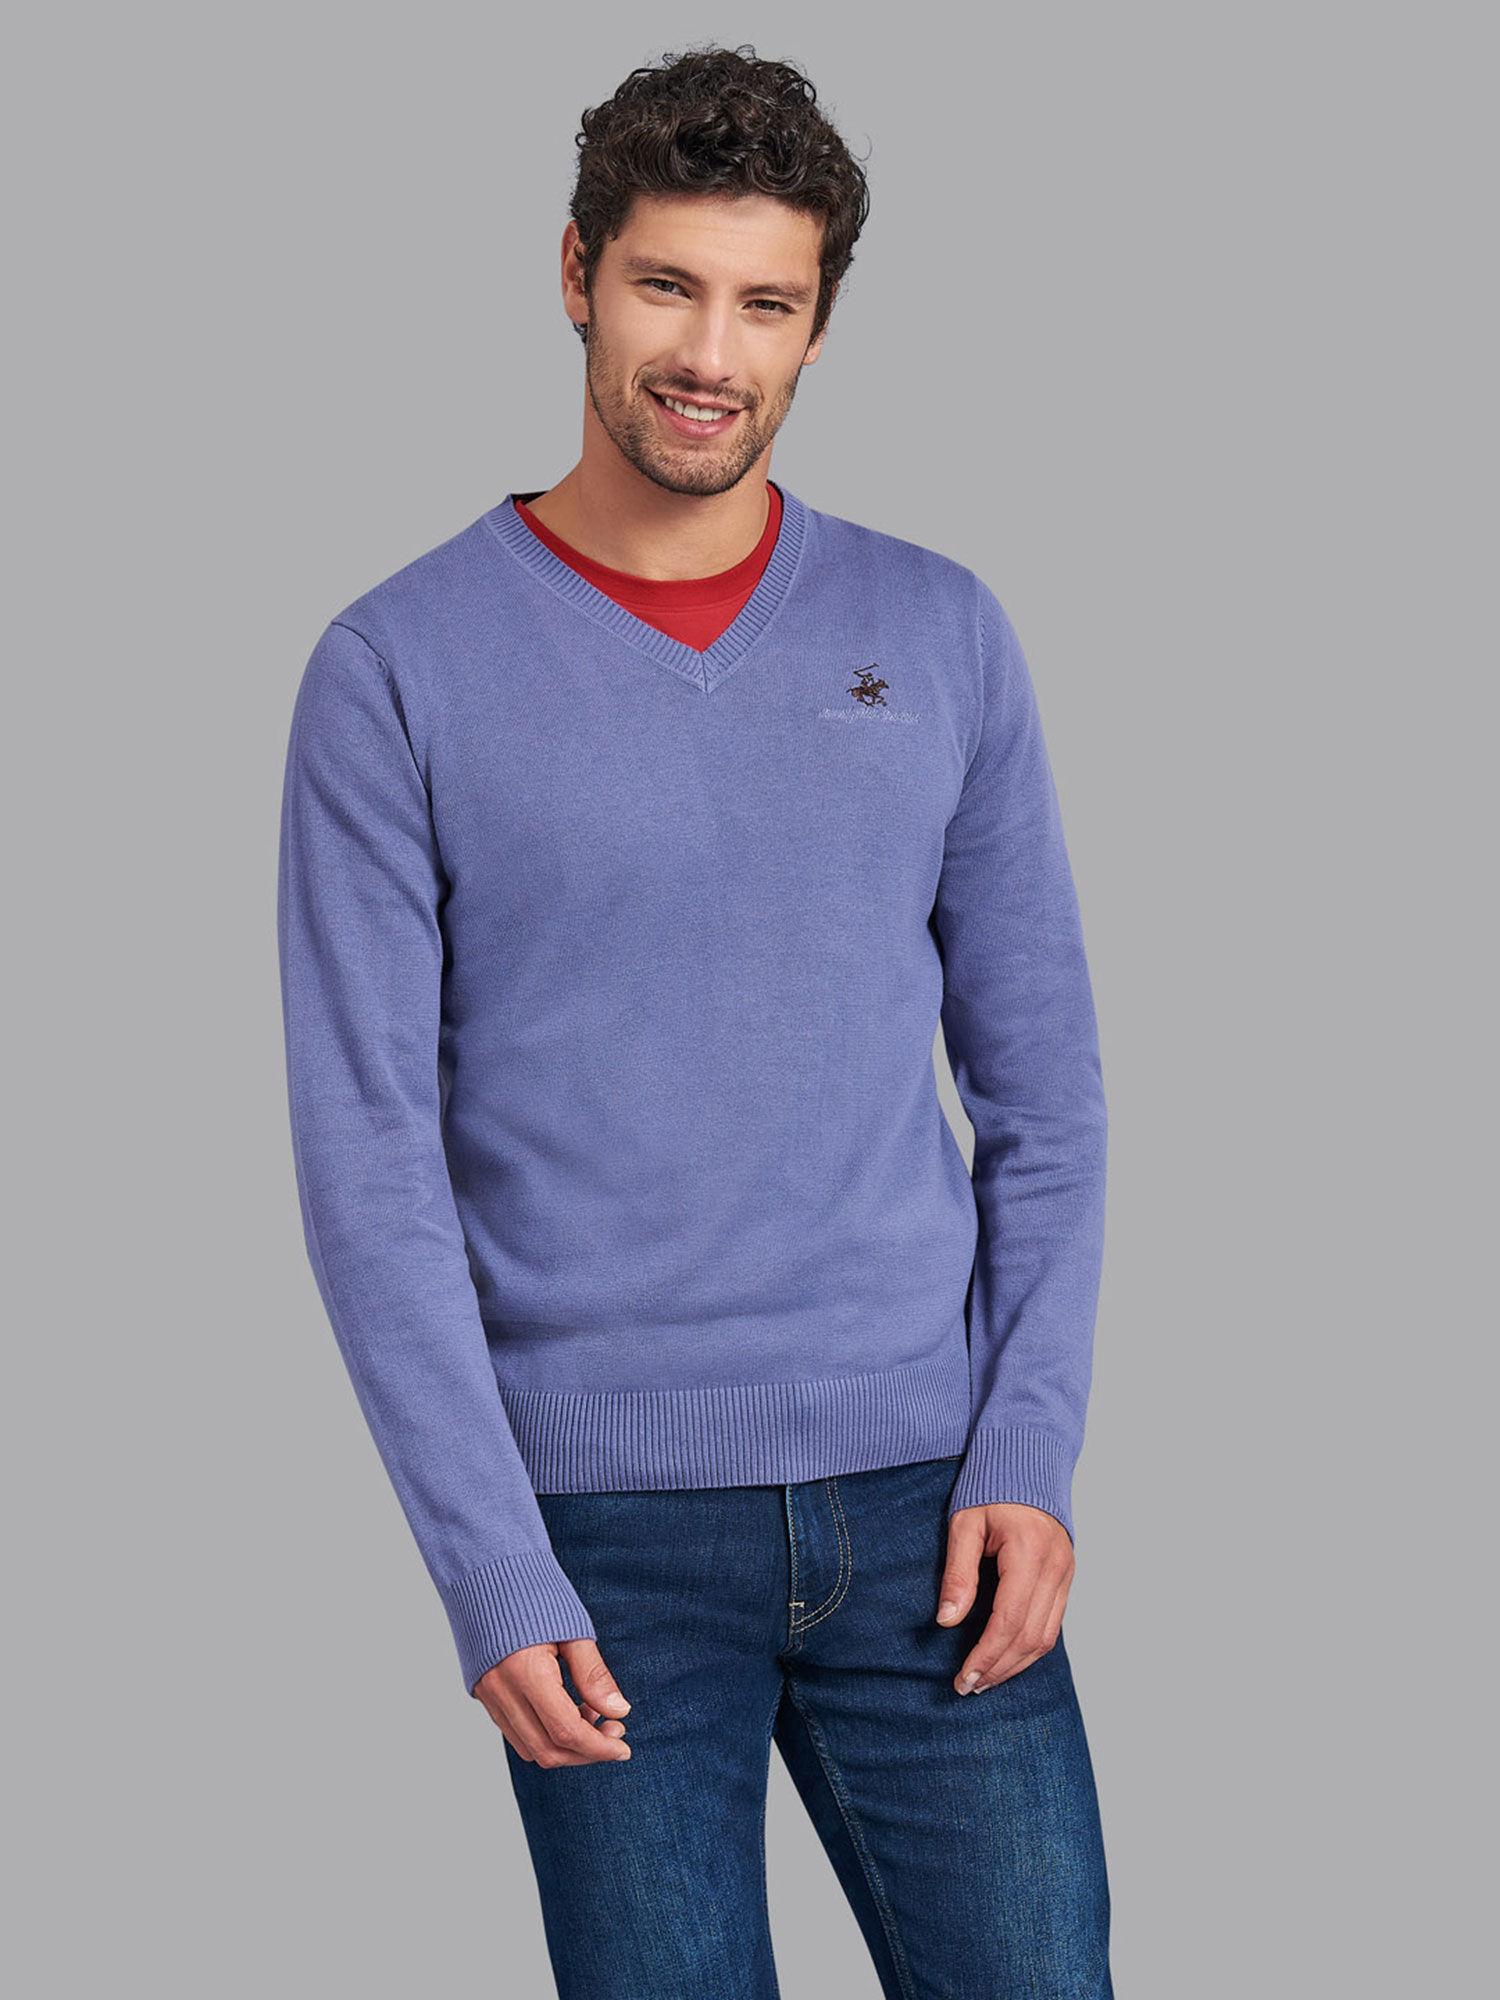 classic v-neck sweater